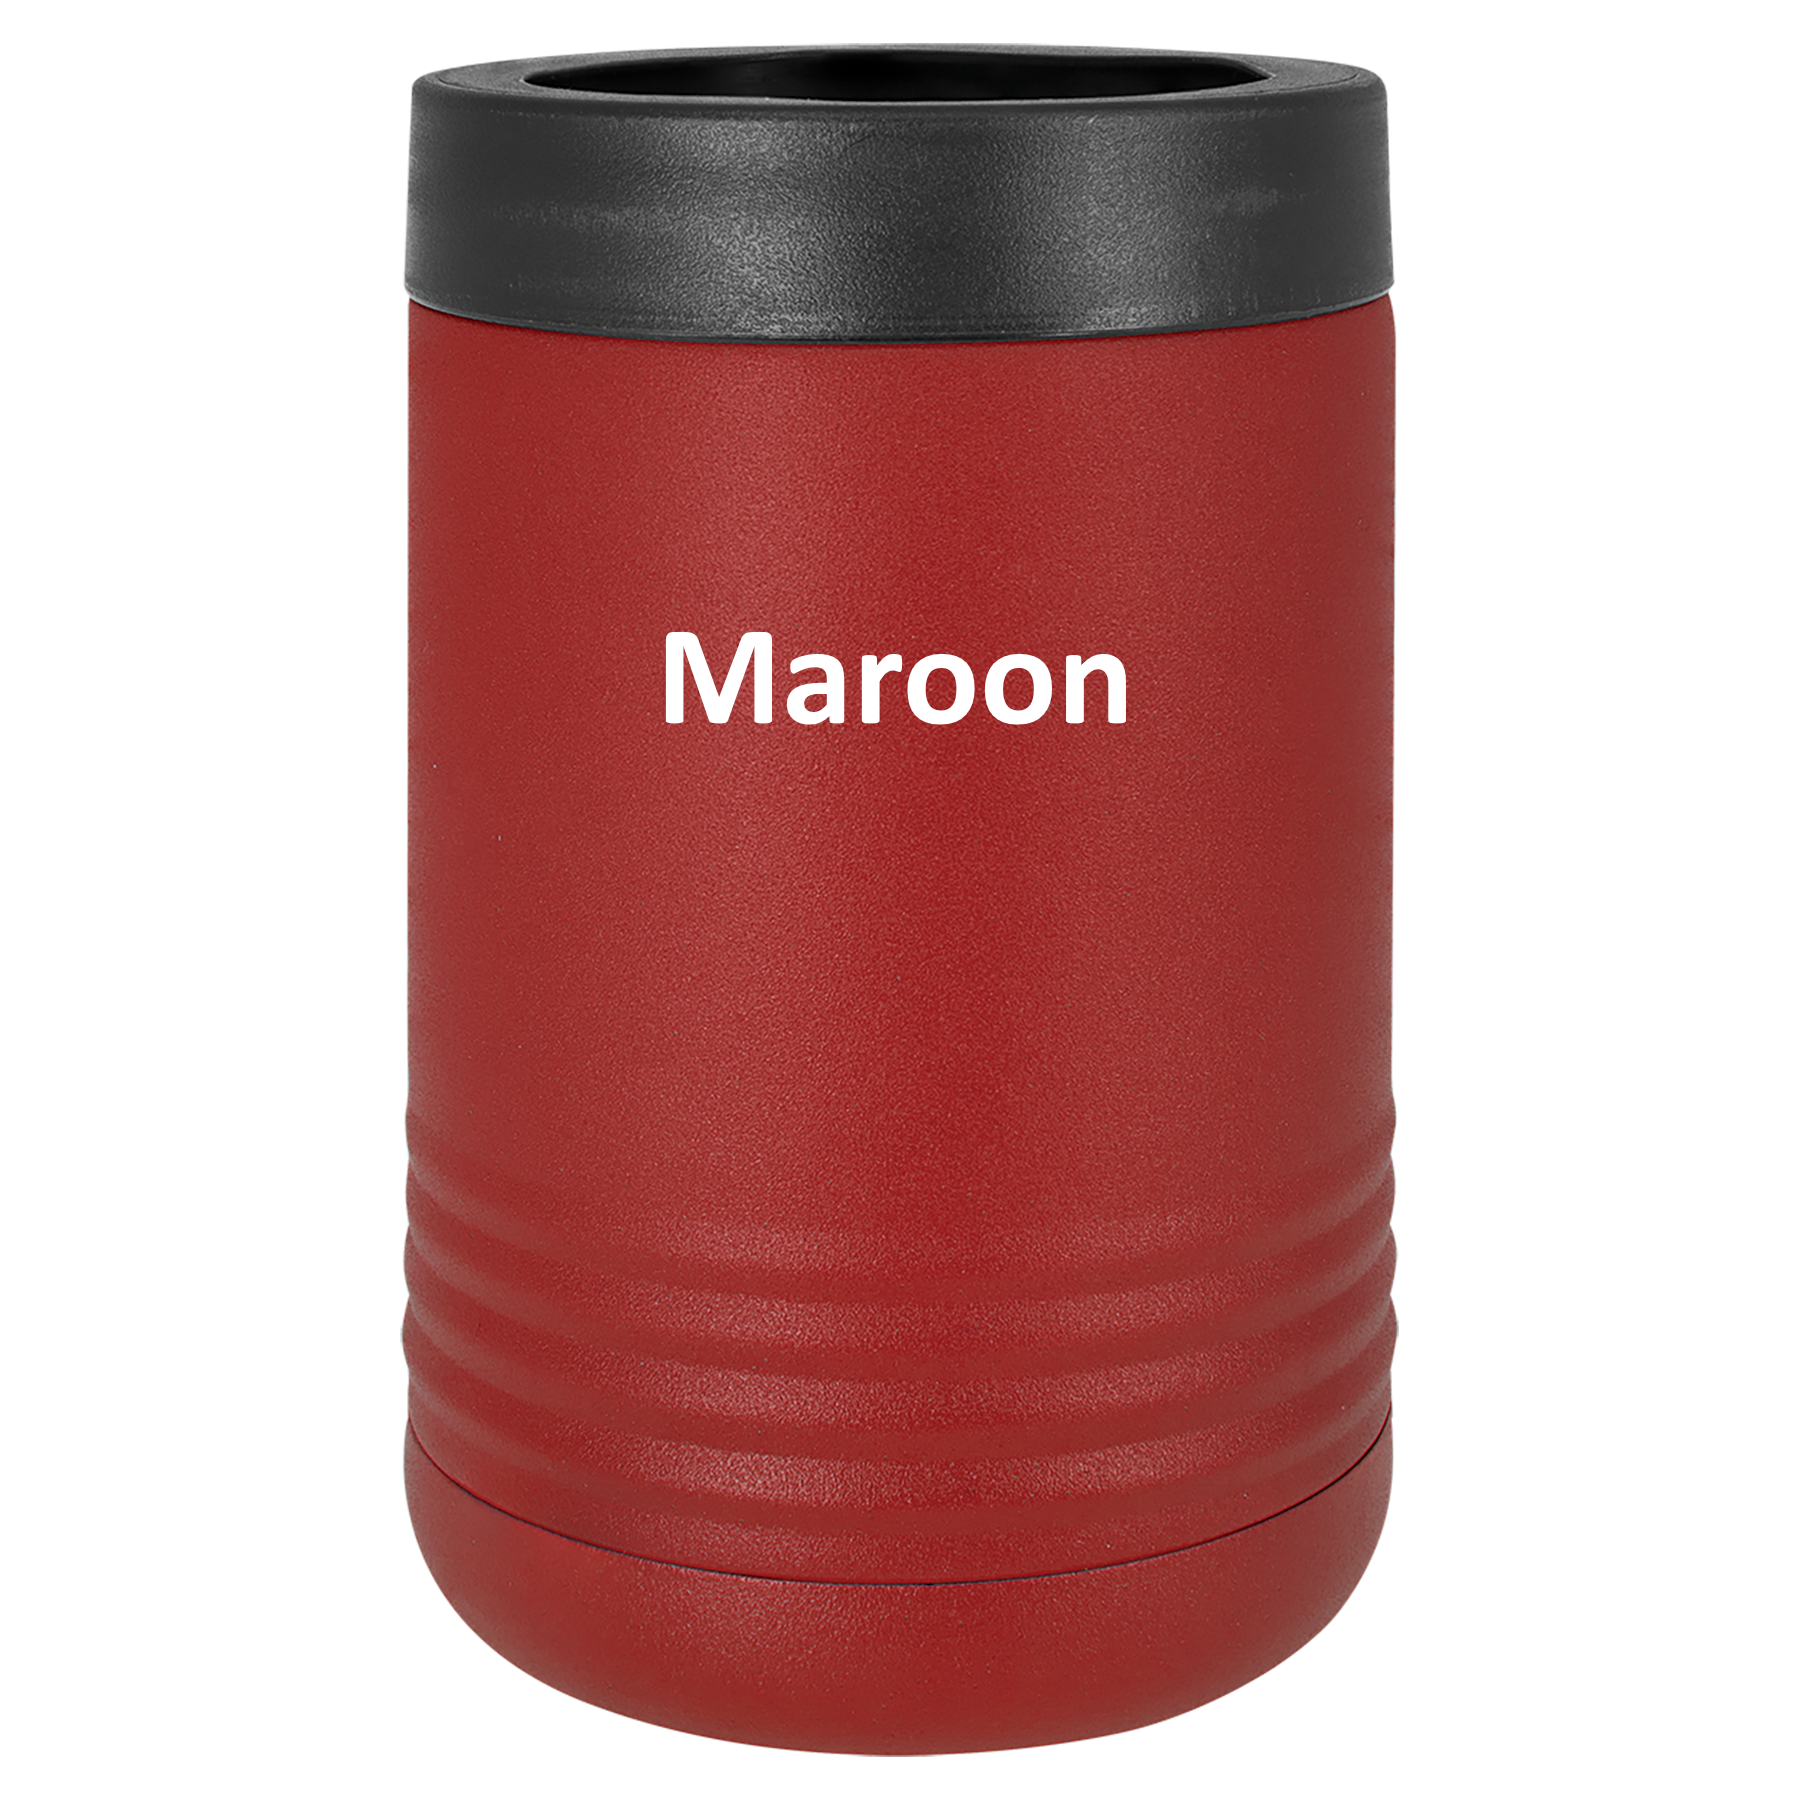 Maroon 'Merica Gun Flag Beverage Holder